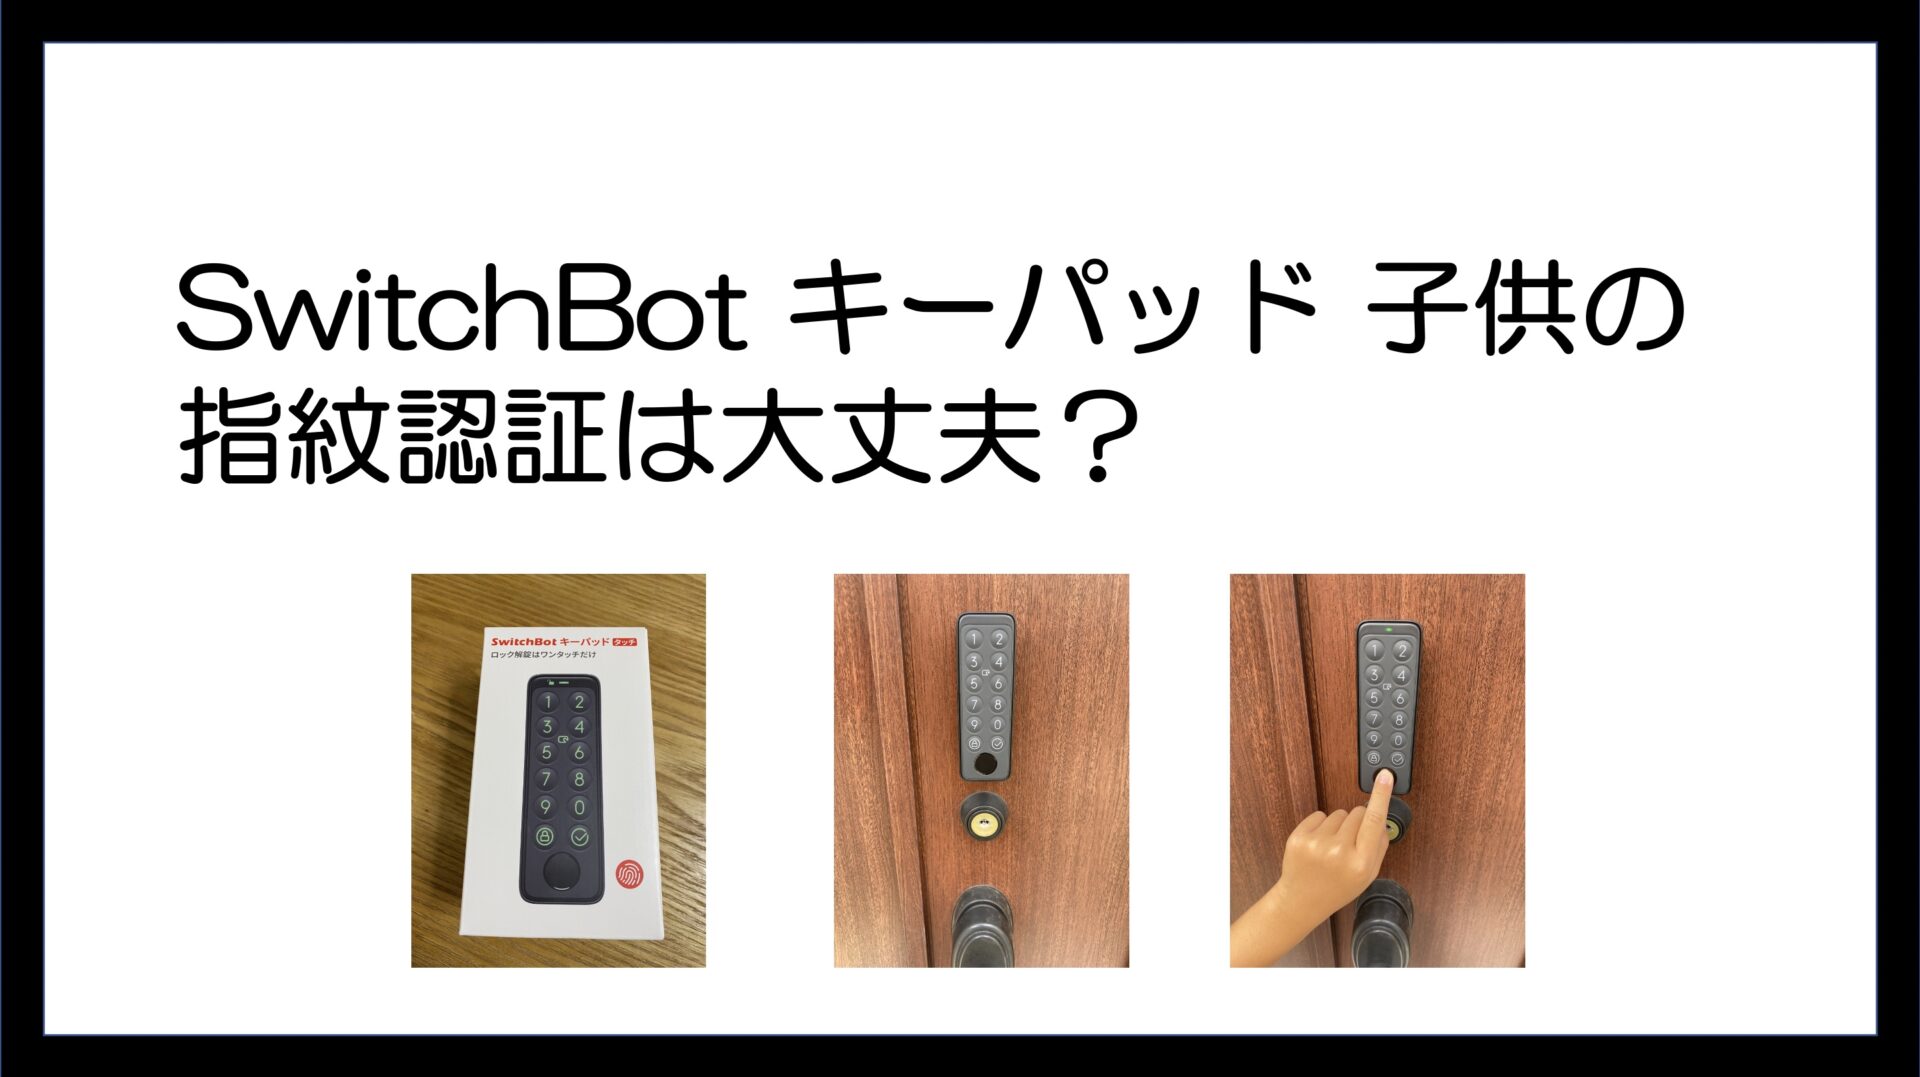 SwitchBot スマートロック 指紋認証パッド セット+spbgp44.ru